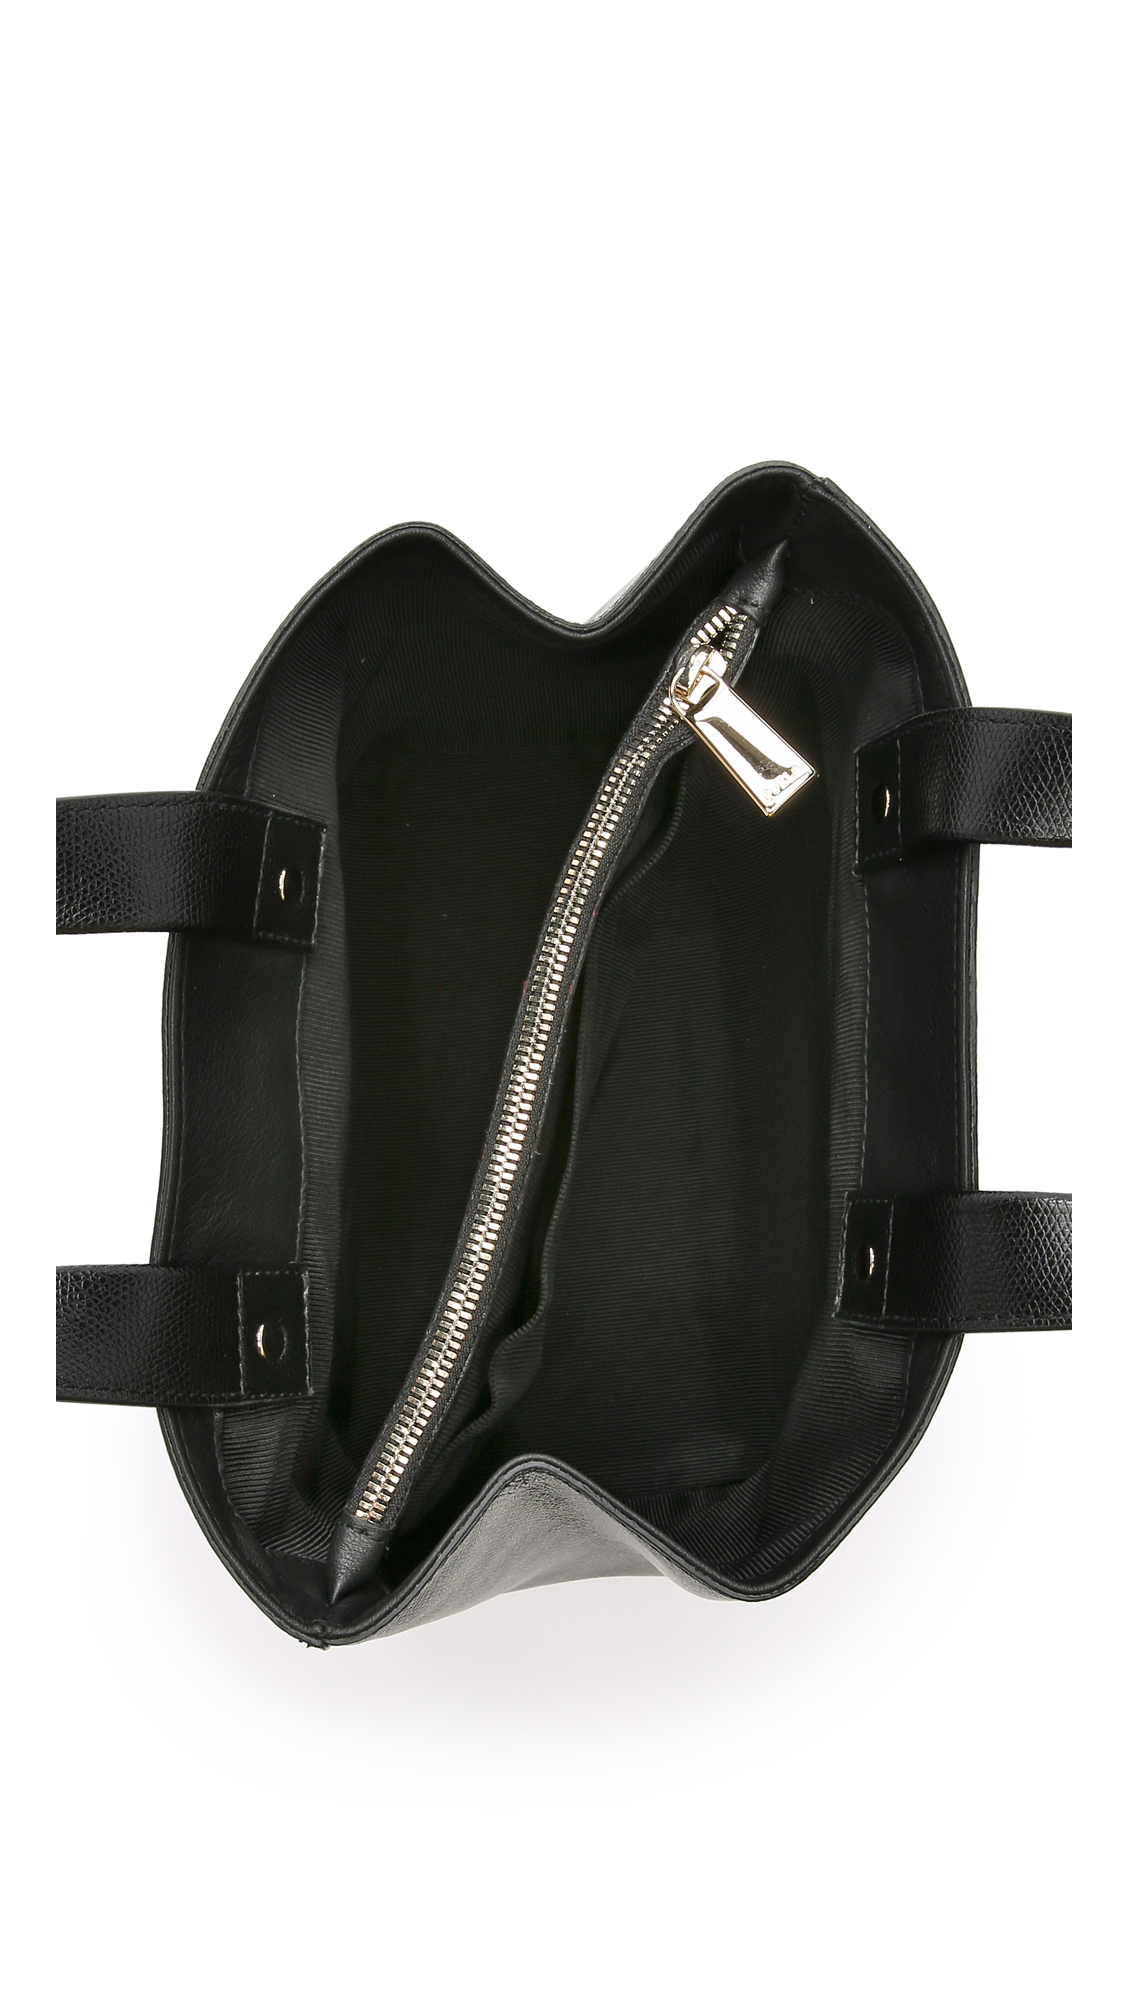 NWT Furla Onyx Black Pebbled Leather Small Elle Tote Bag $248